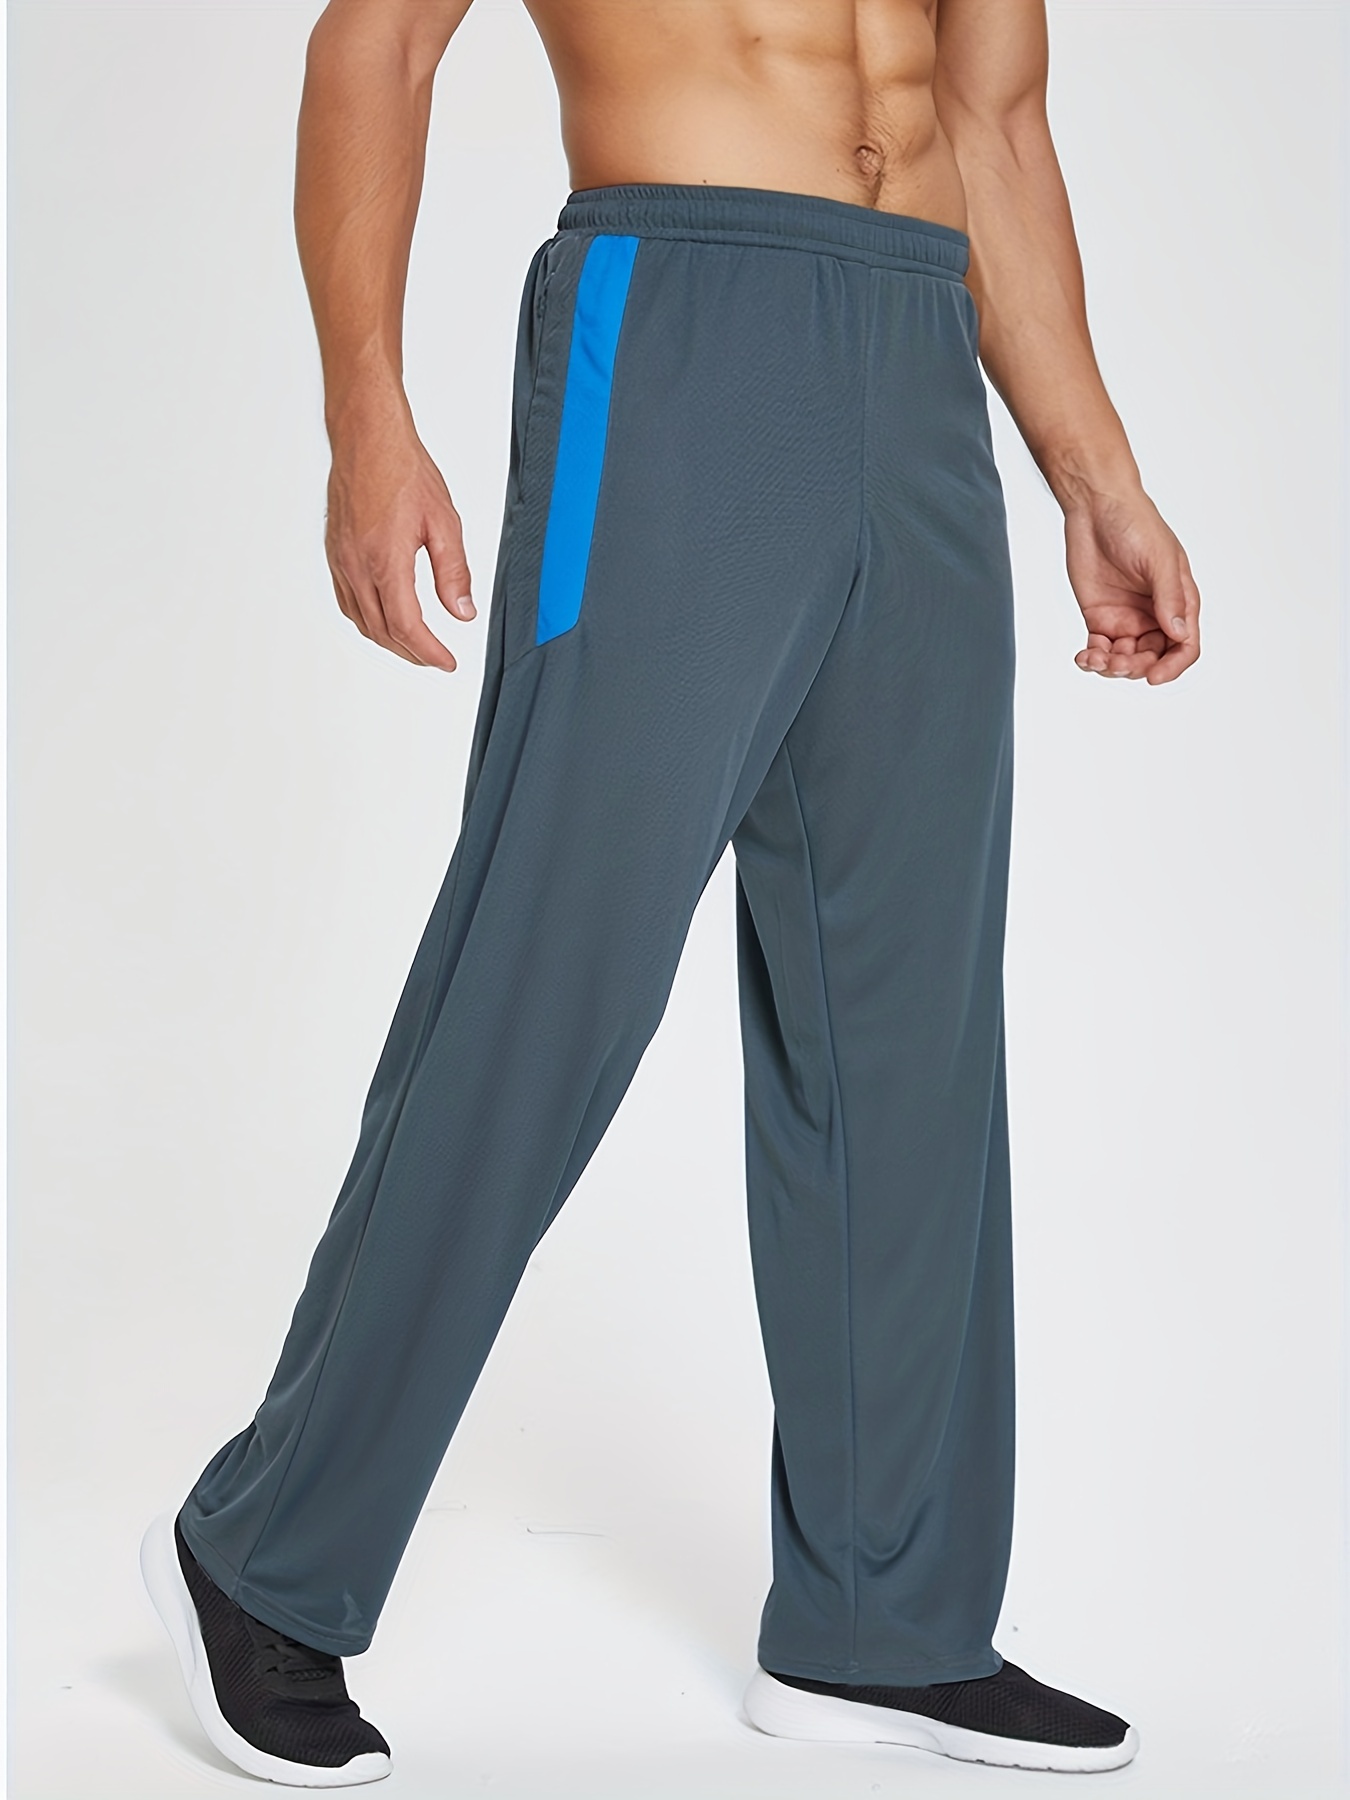 Puma Sweatpants : Buy Puma Favourite Woven Full-length Men's Training Pants  Online | Nykaa Fashion